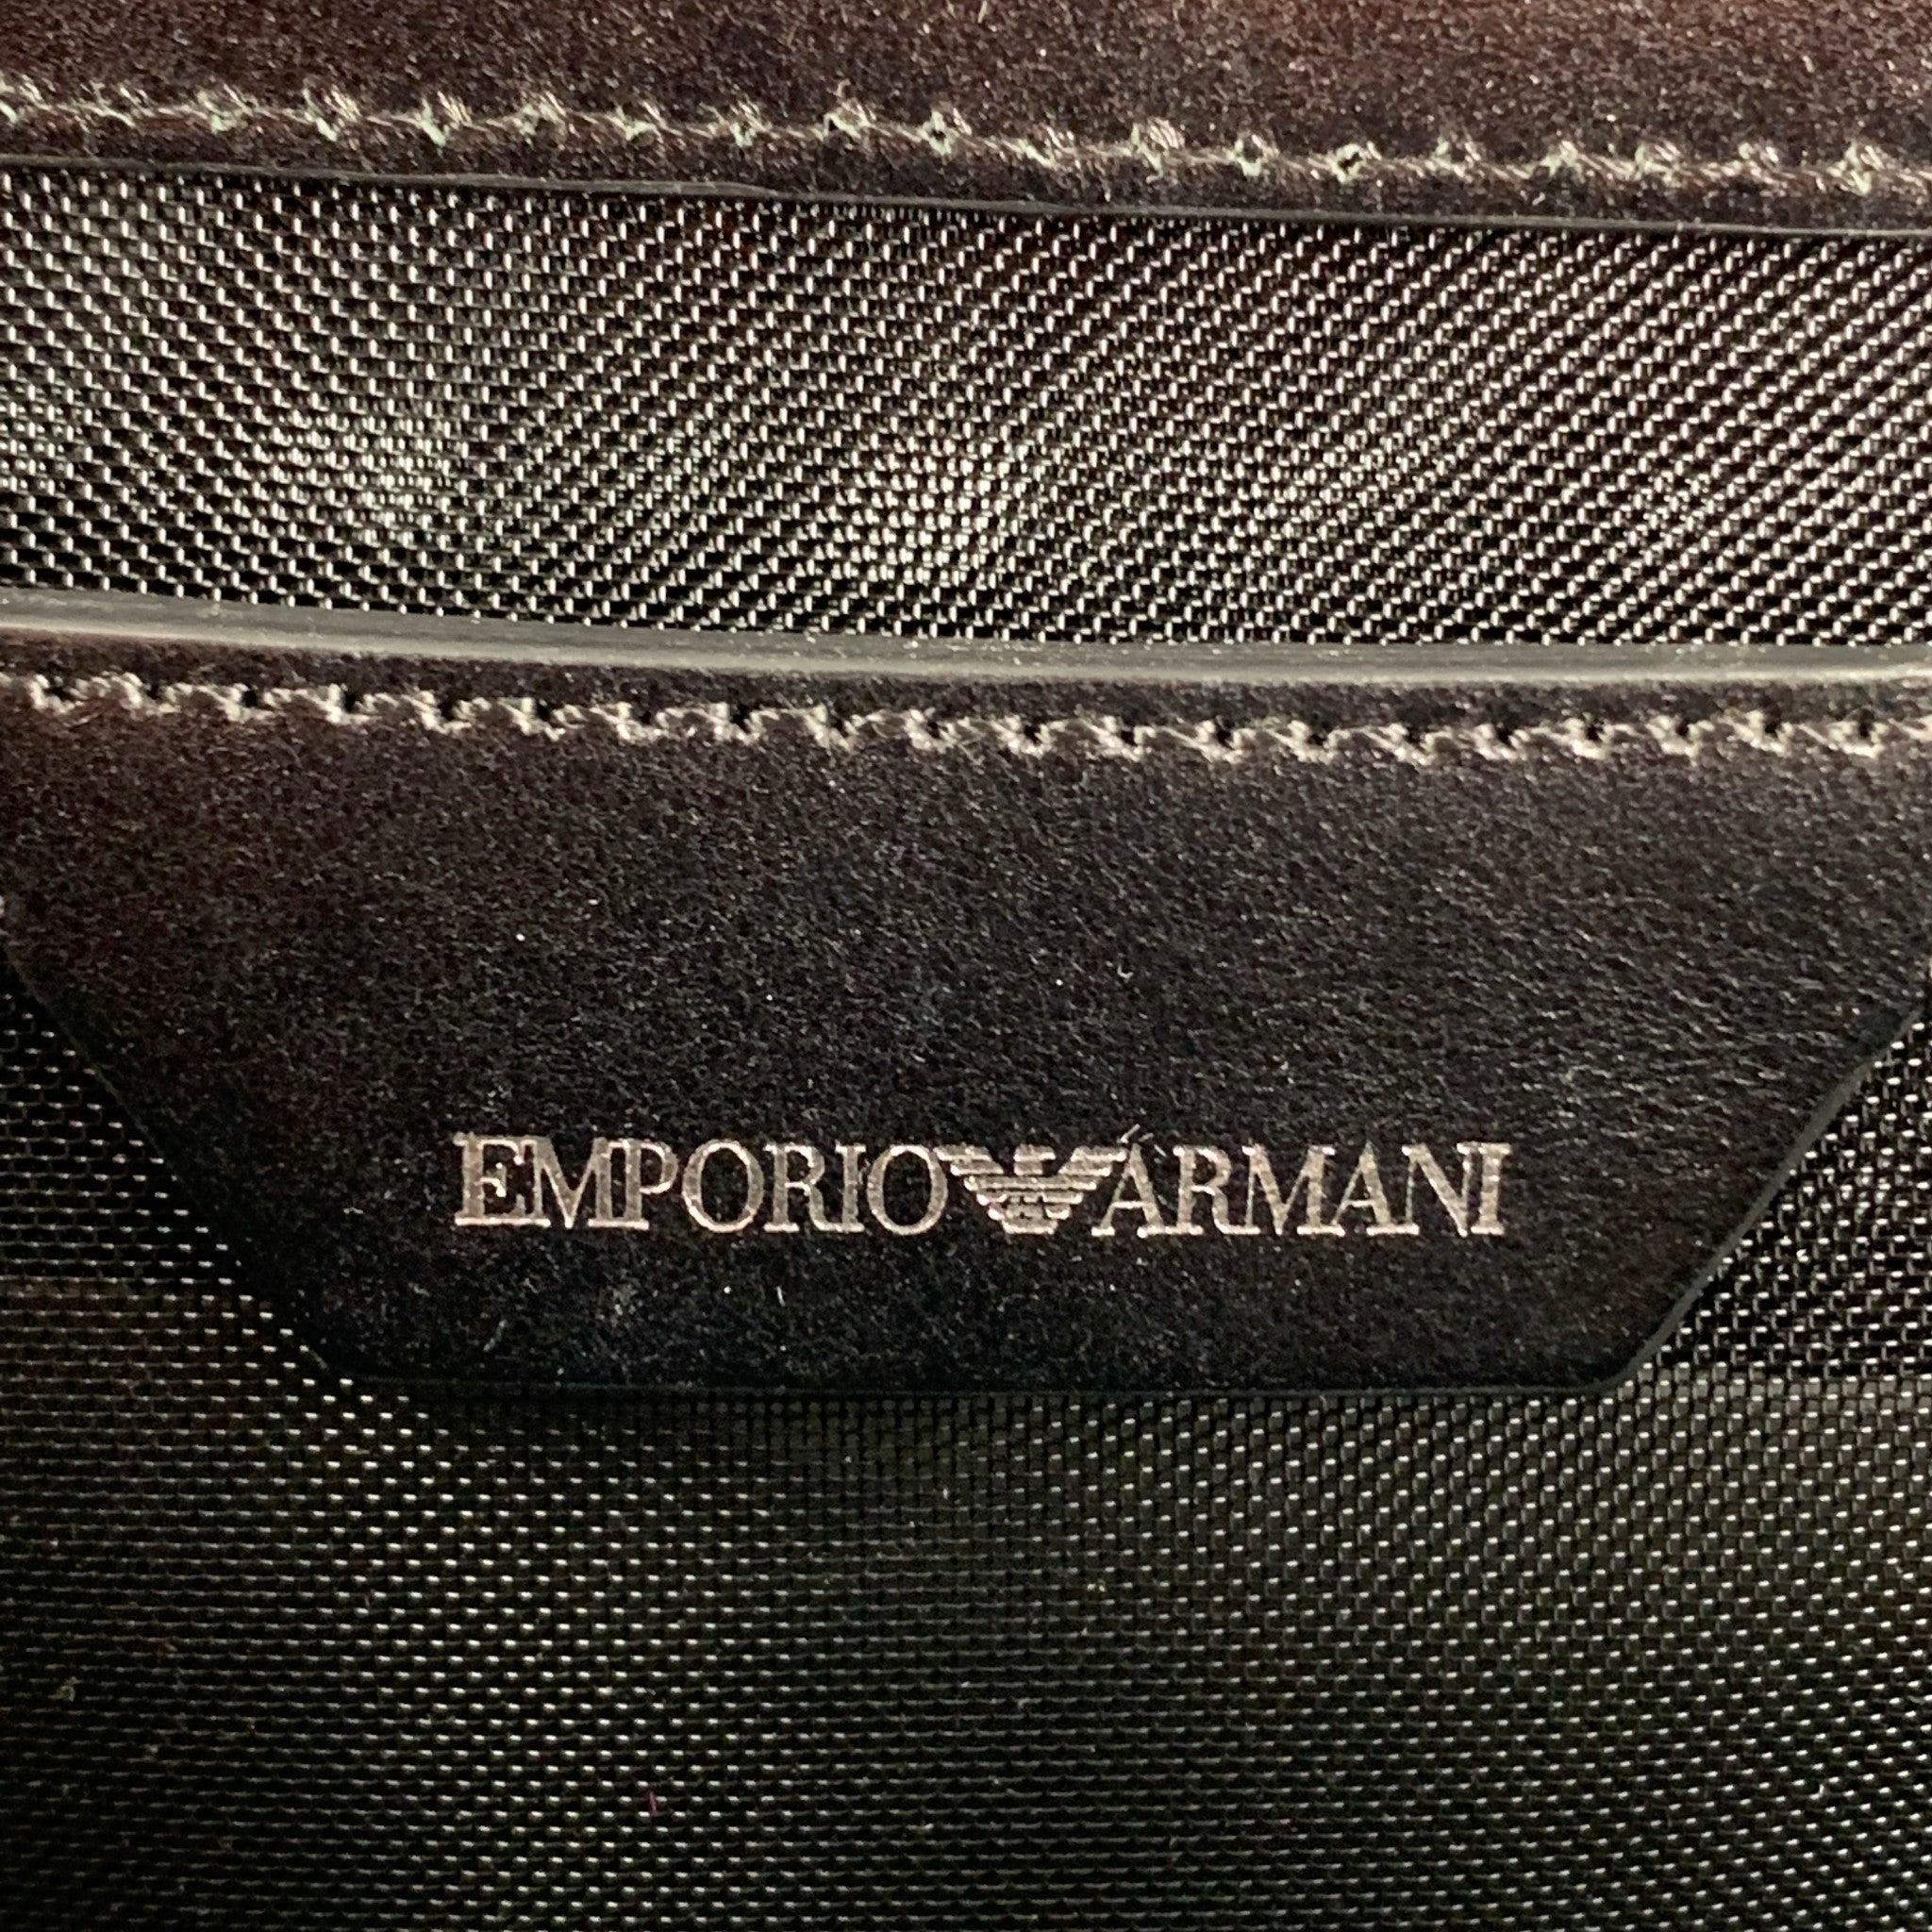 EMPORIO ARMANI Black Silver Mesh Leather Nylon Handbag For Sale 3